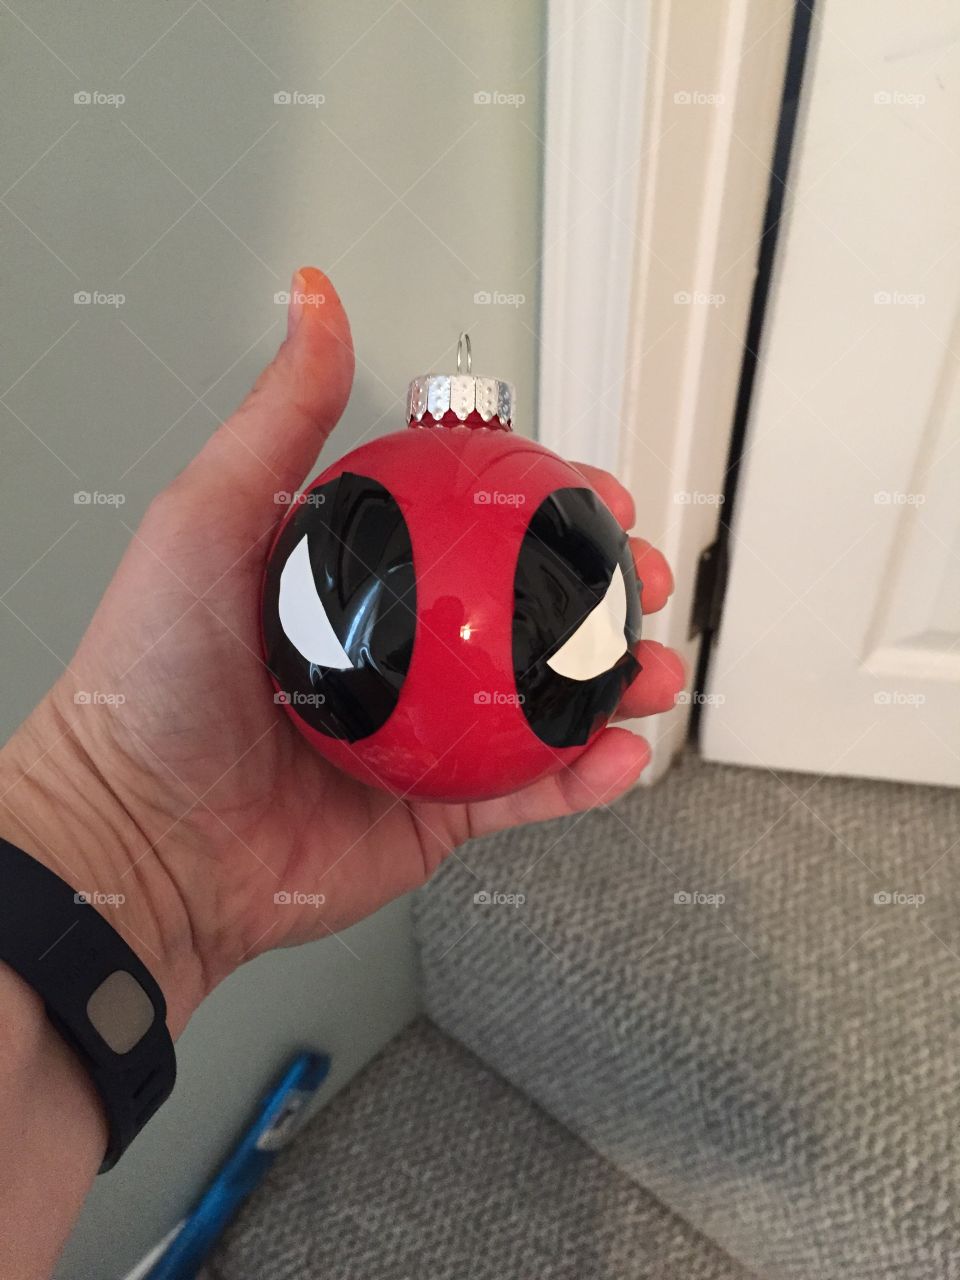 Deadpool ornament